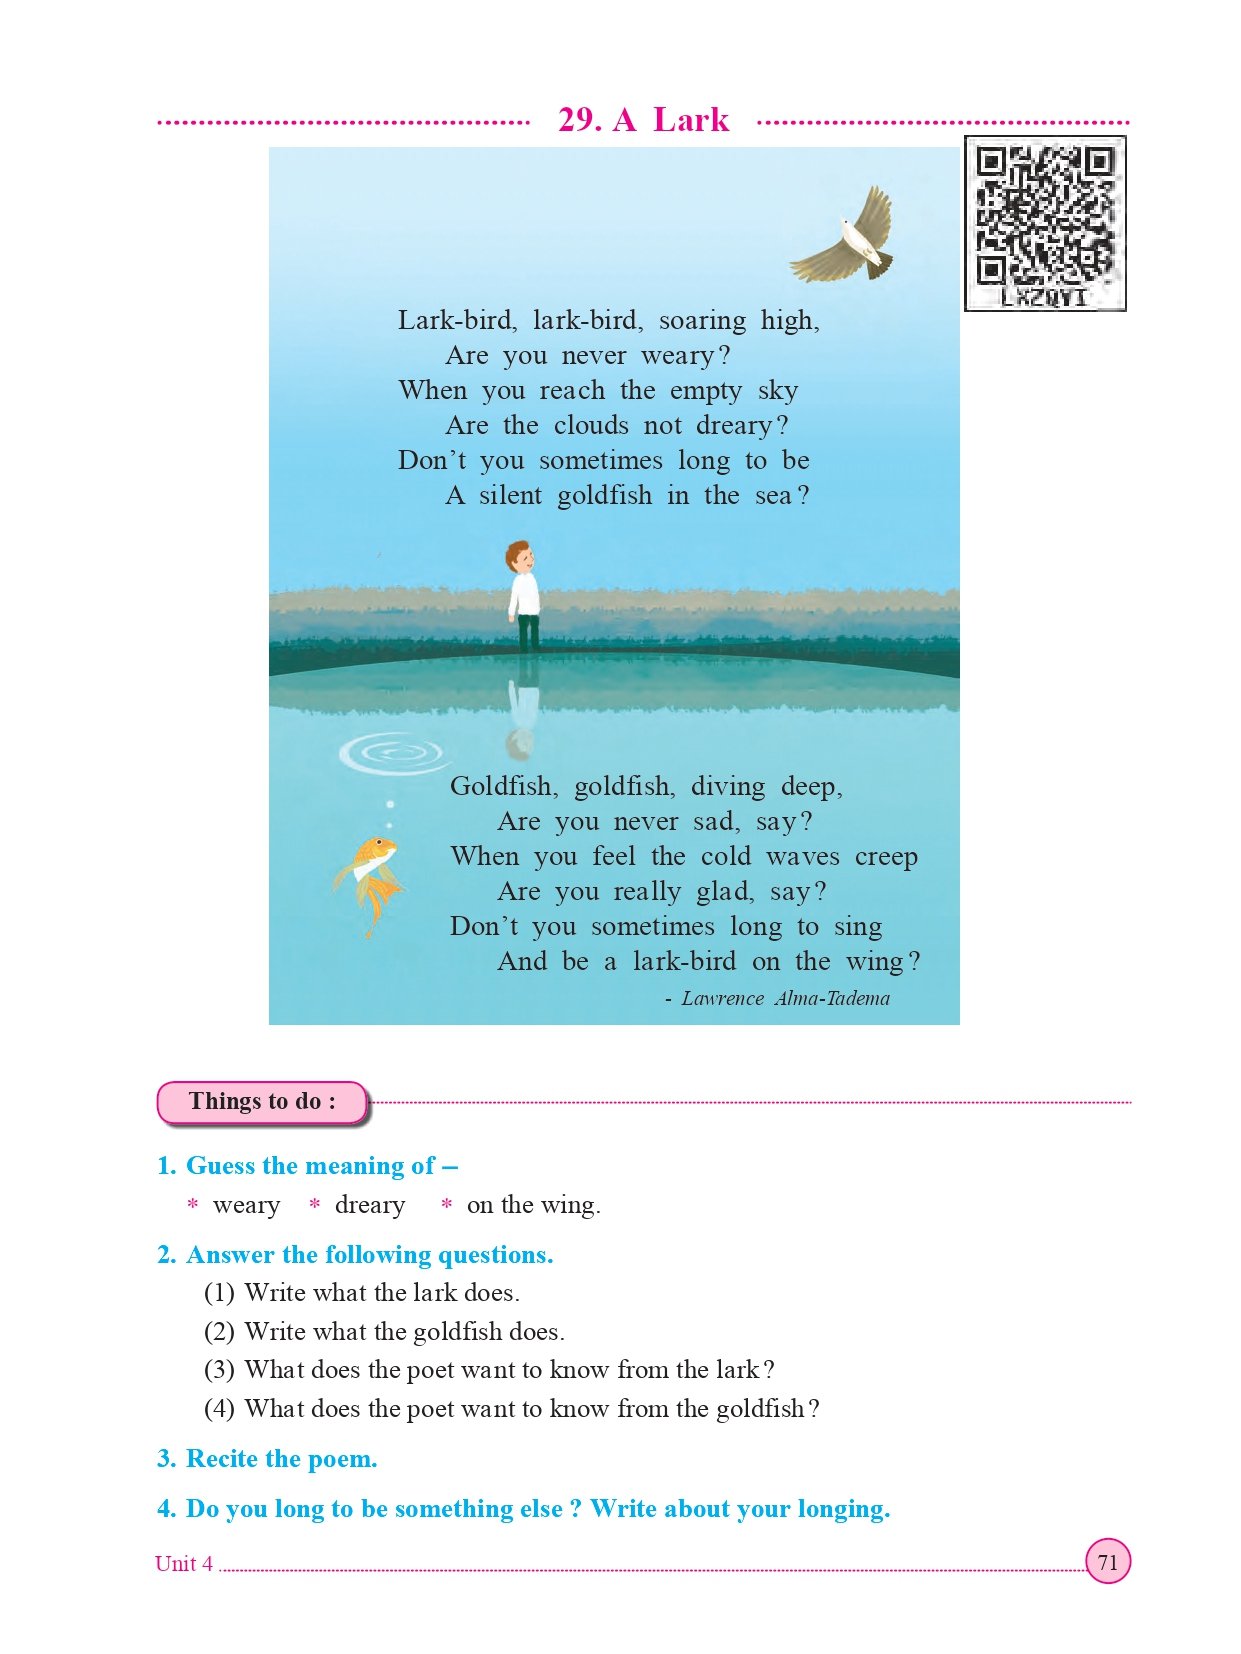 maharashtra-board-5th-standard-english-book-pdf